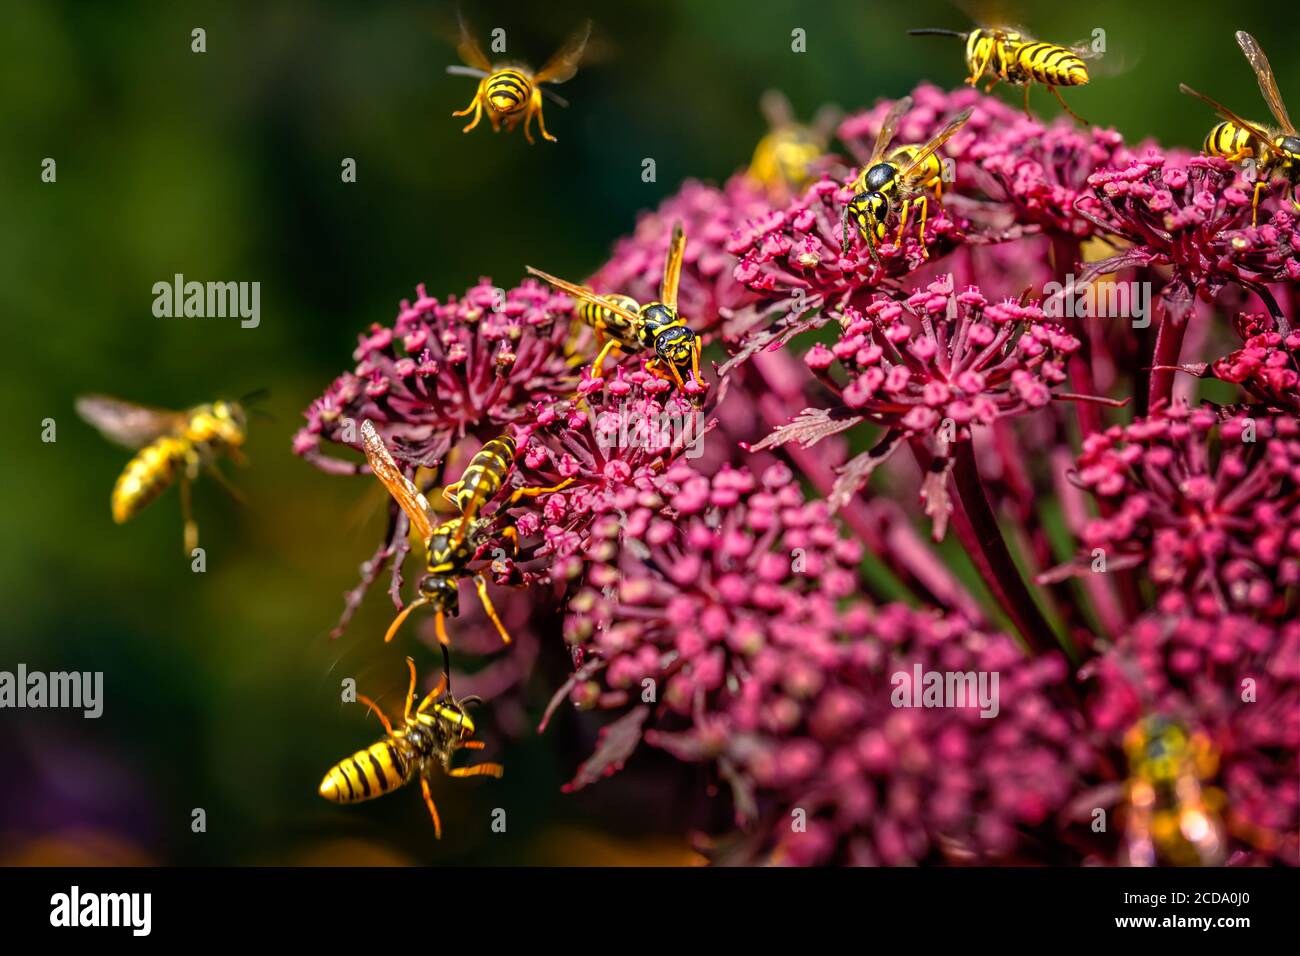 Wasps (Deutsche Wespe / vespula germanica) pollinating and fighting around Giant Angelica (Roter Engelwurz / angelica gigas). Stock Photo